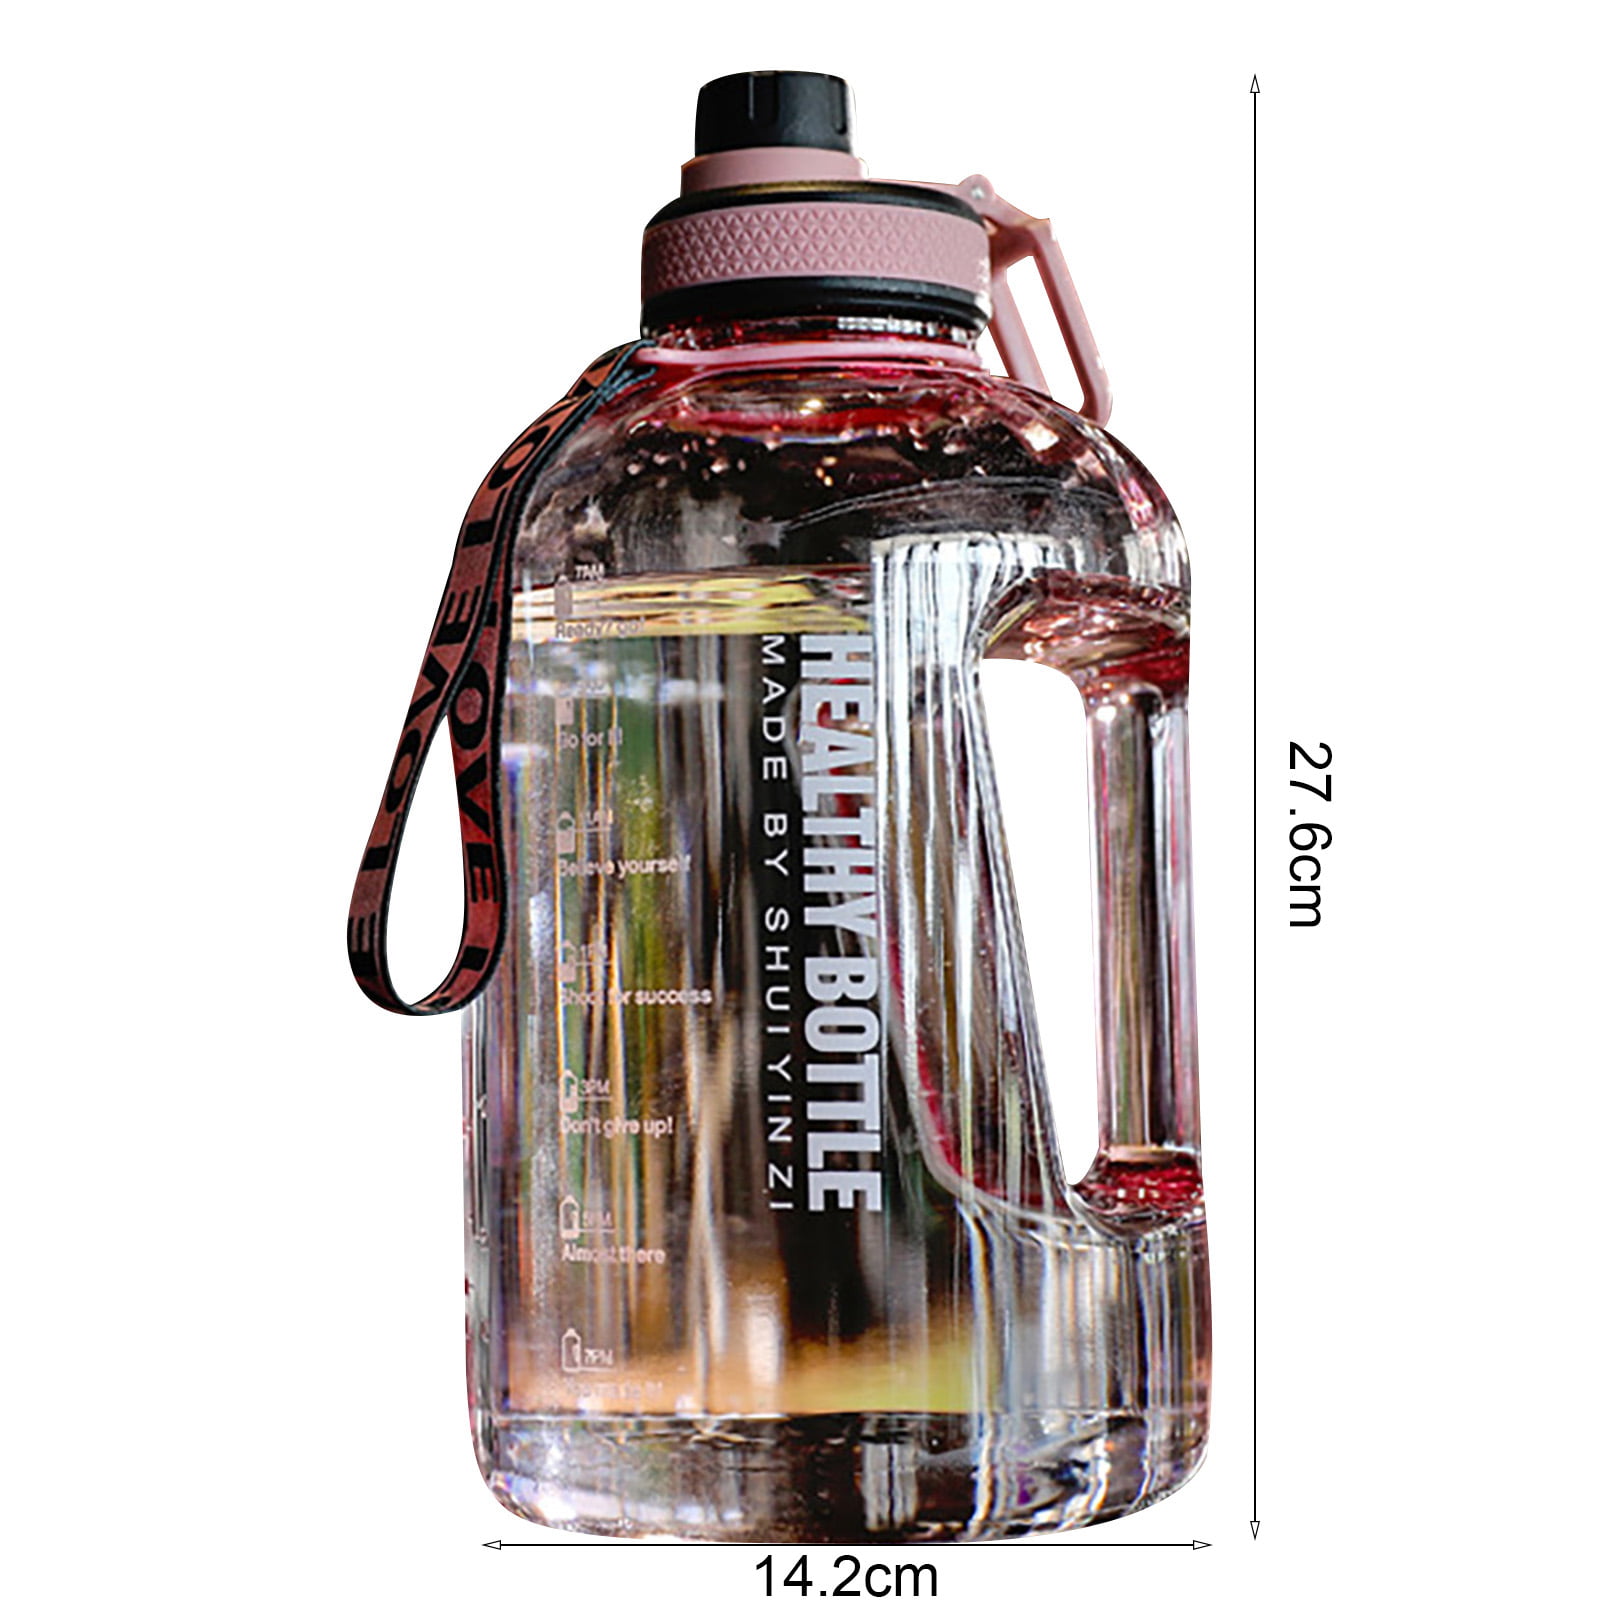 US$ 15.98 - Large Capacity Plastic Water Bottles 2-Pack Leak-Proof Gym Water  Bottles (Mixed Colors) - m.